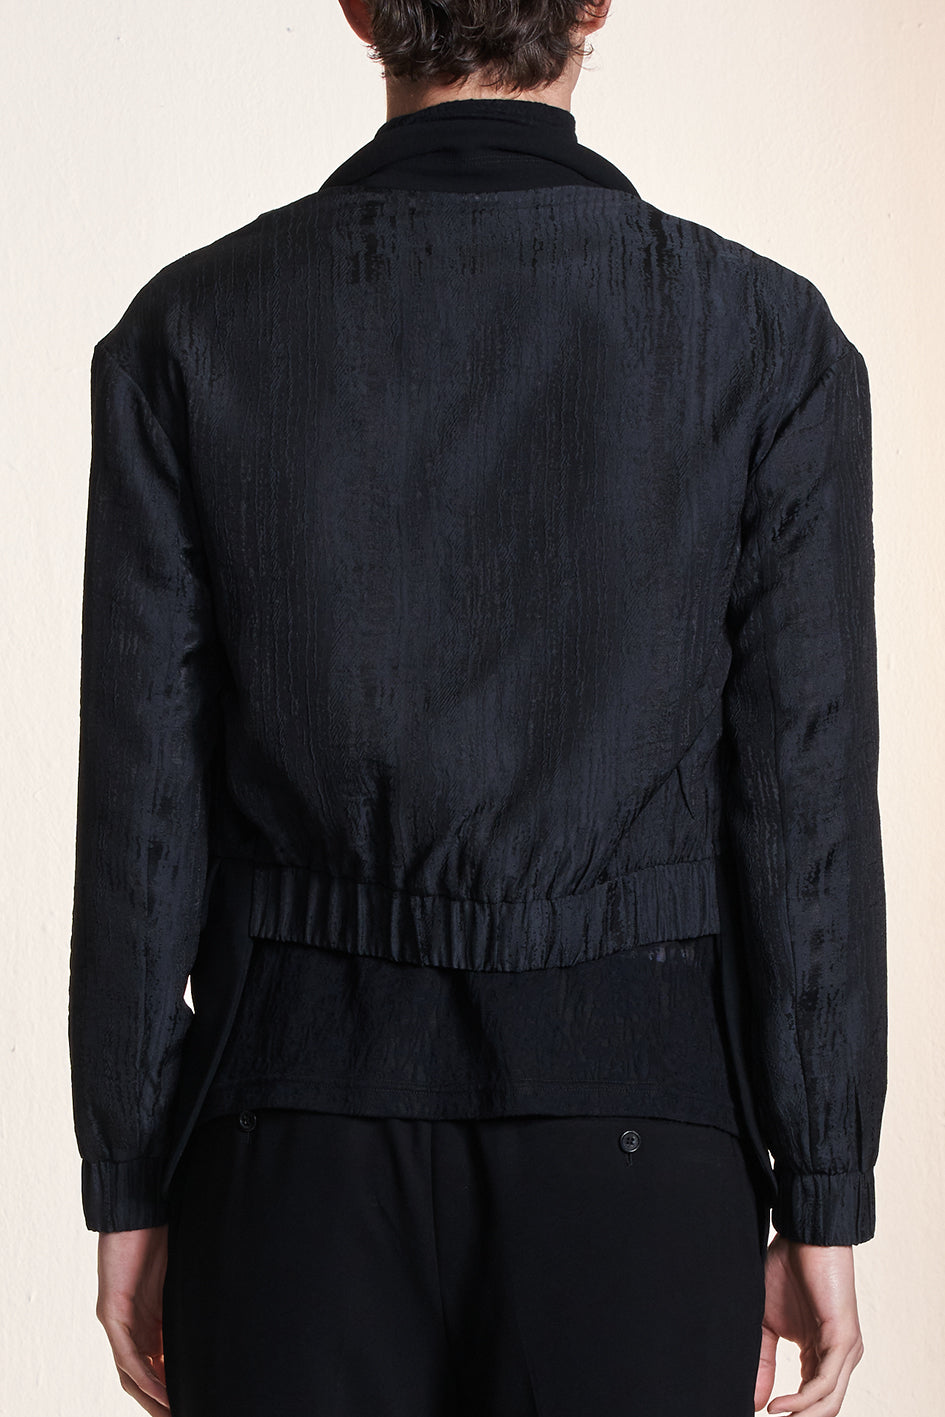 Deconstructed Blazer With Textured Jacket